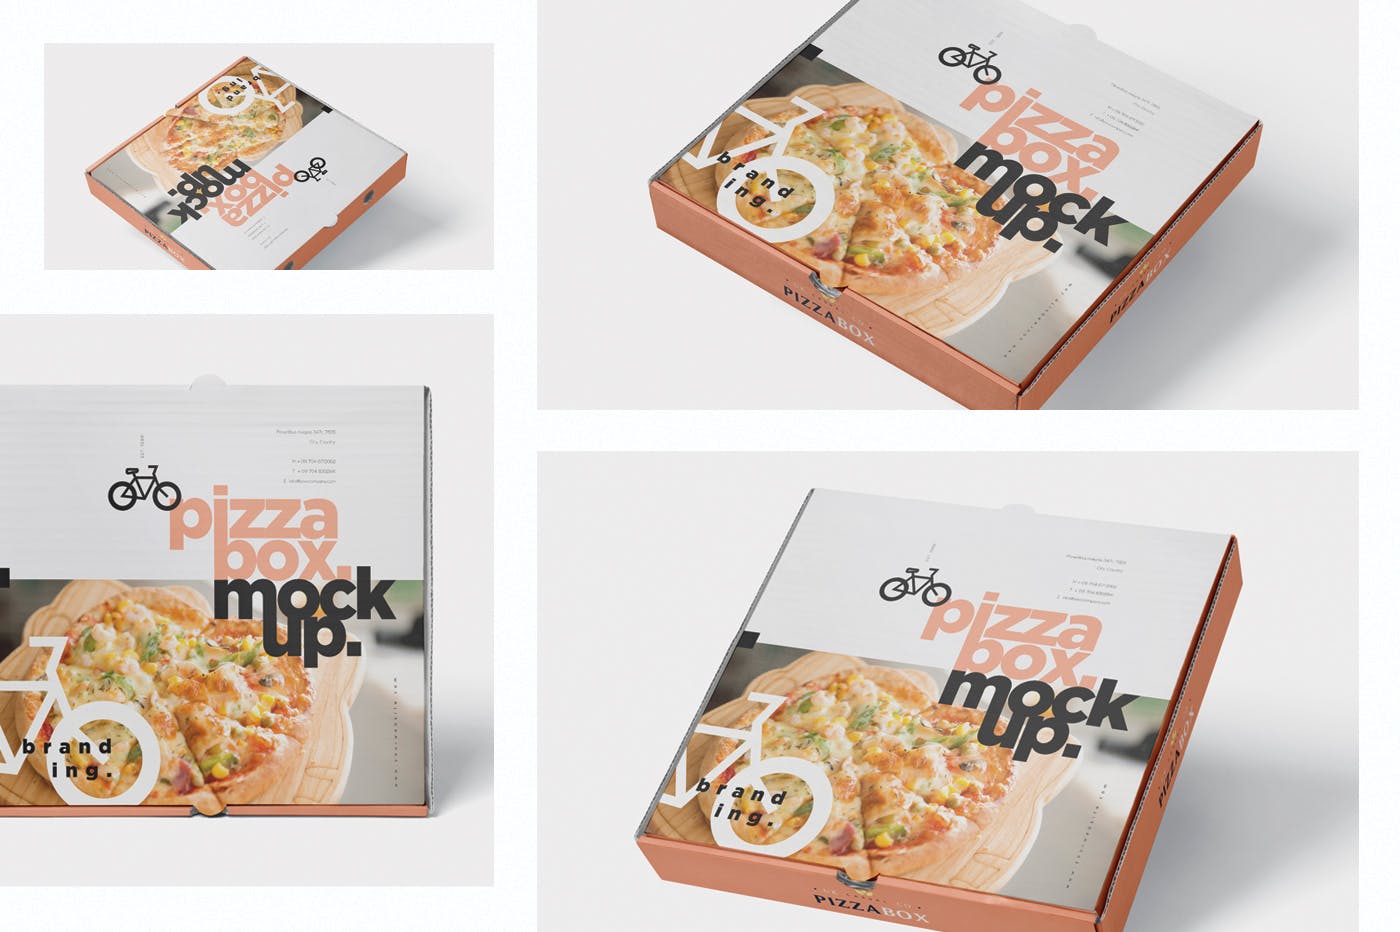 披萨外带包装纸盒设计图样机 Pizza Box Mock-Up – Grocery Store Edition插图(1)